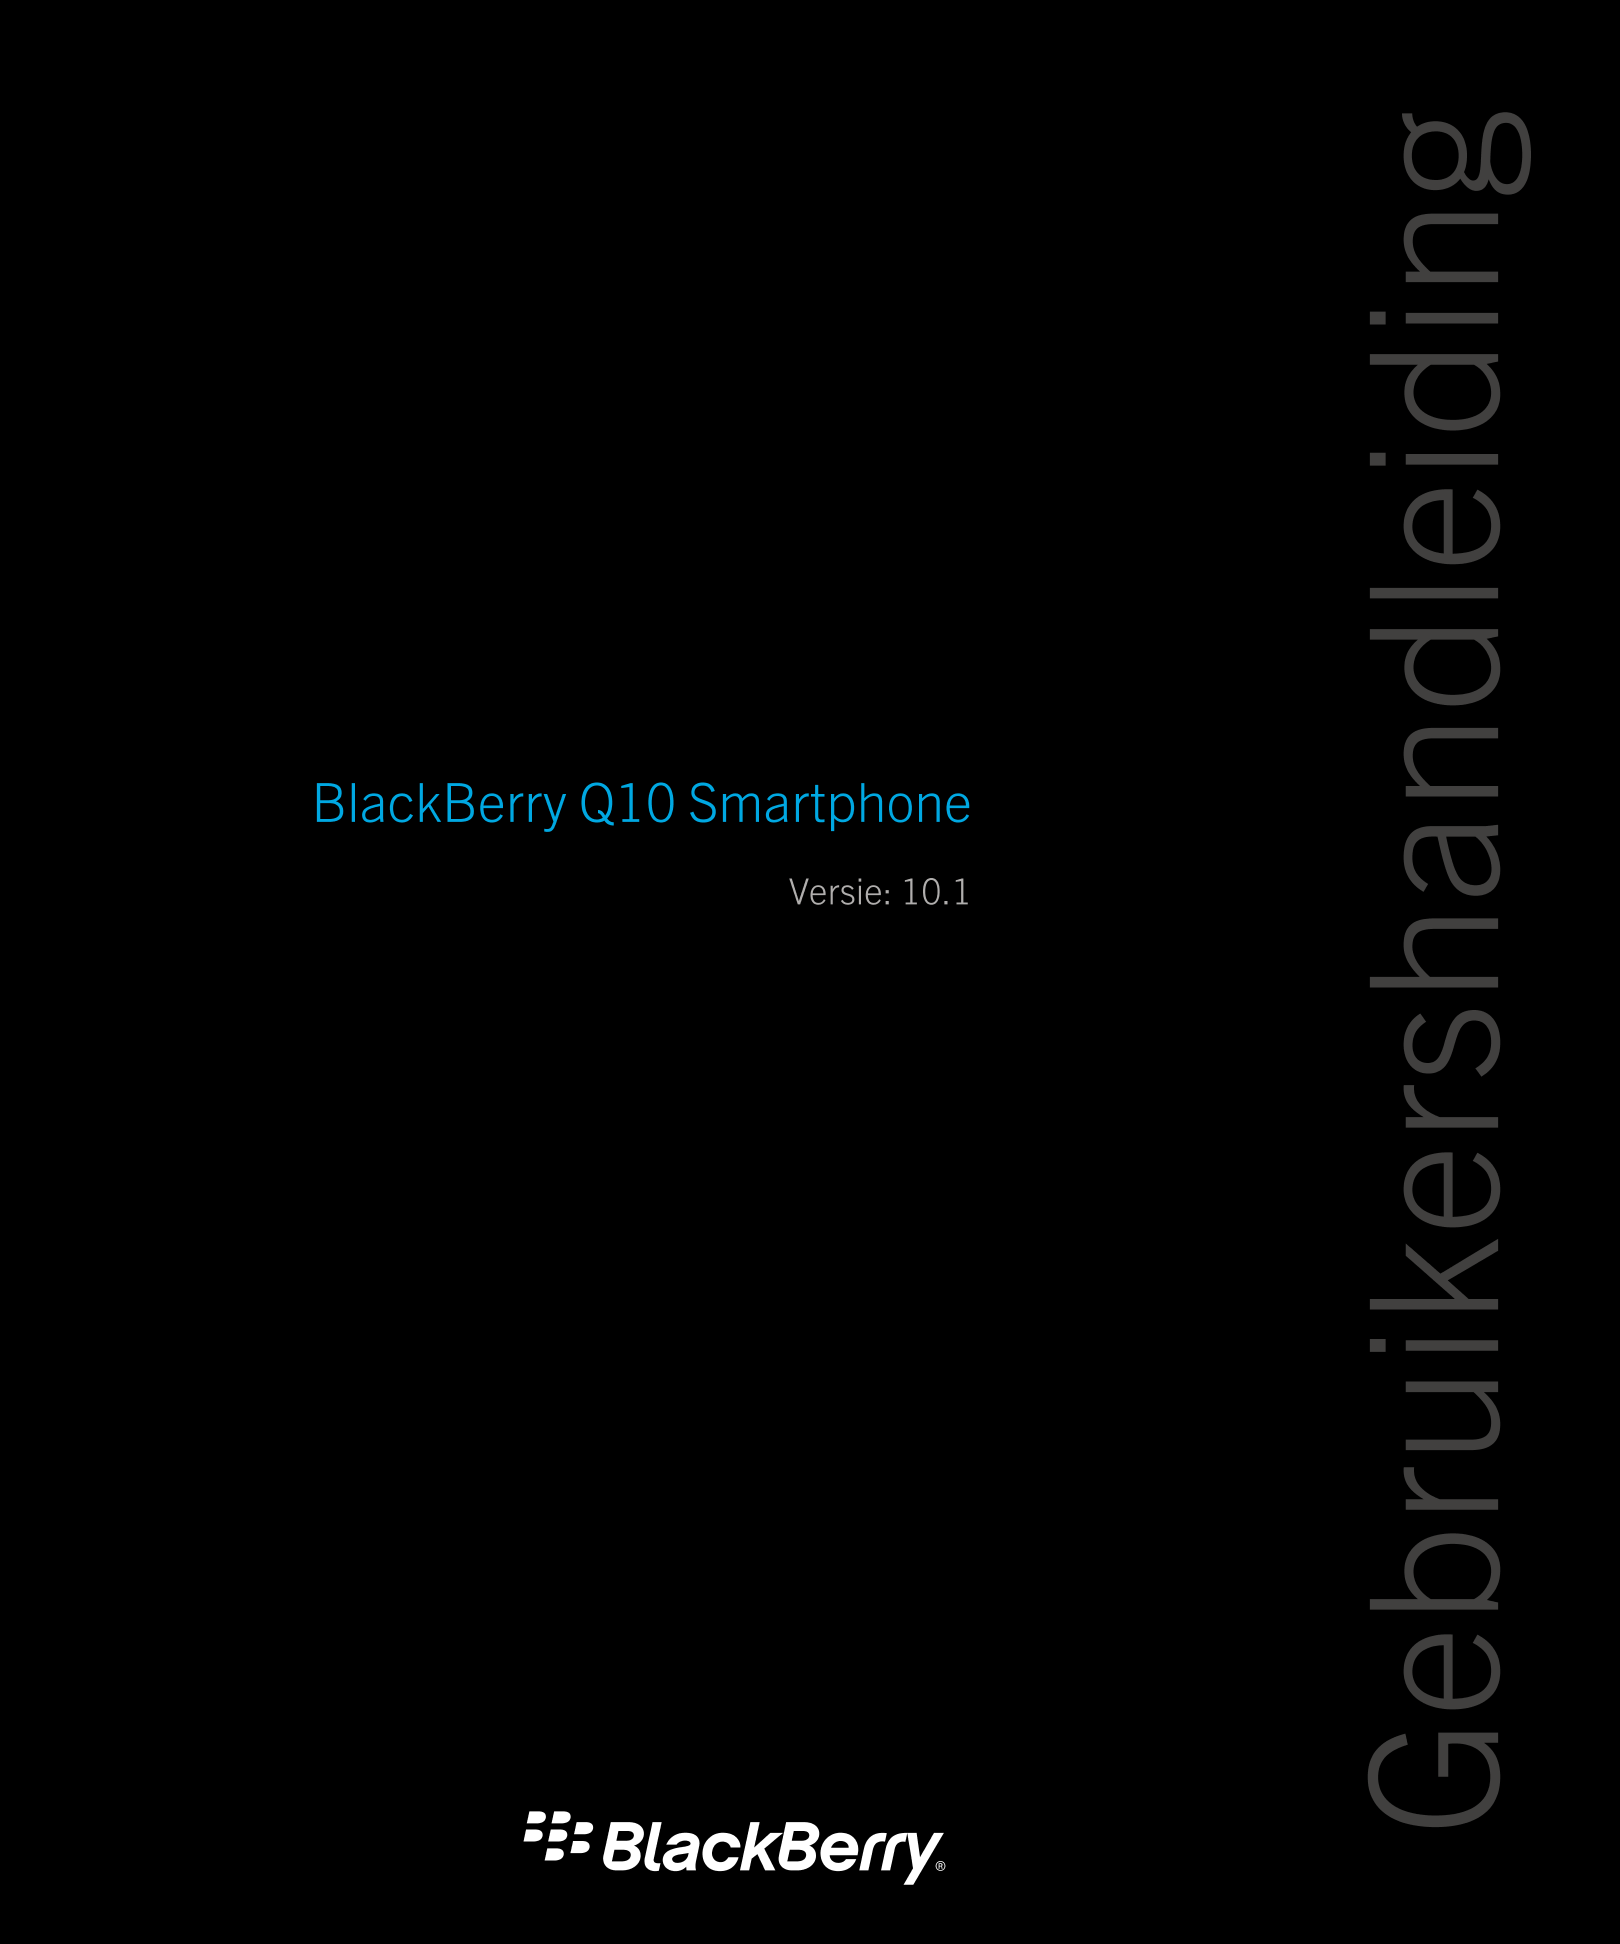 Gebruikershandleiding
BlackBerry Q10 Smartphone
Versie: 10.1